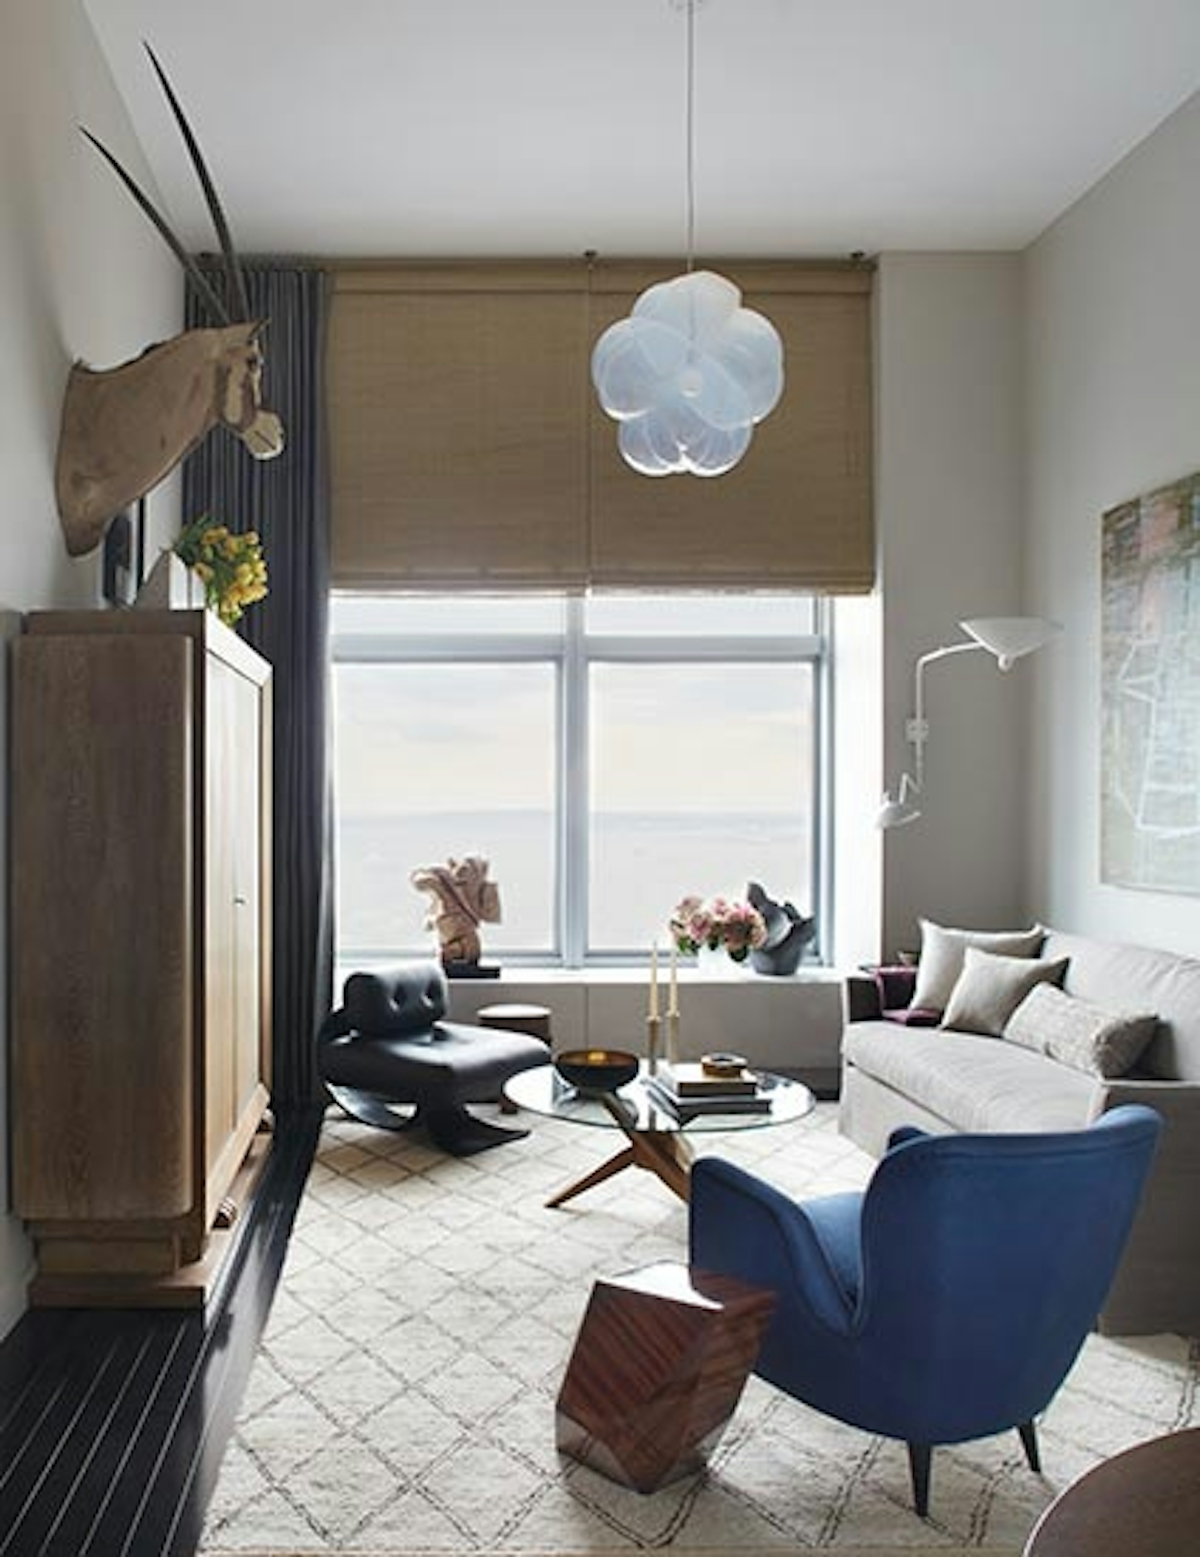 Neal Beckstedt Q&A | New York Based Interior Designer | LuxDeco.com Style Guide